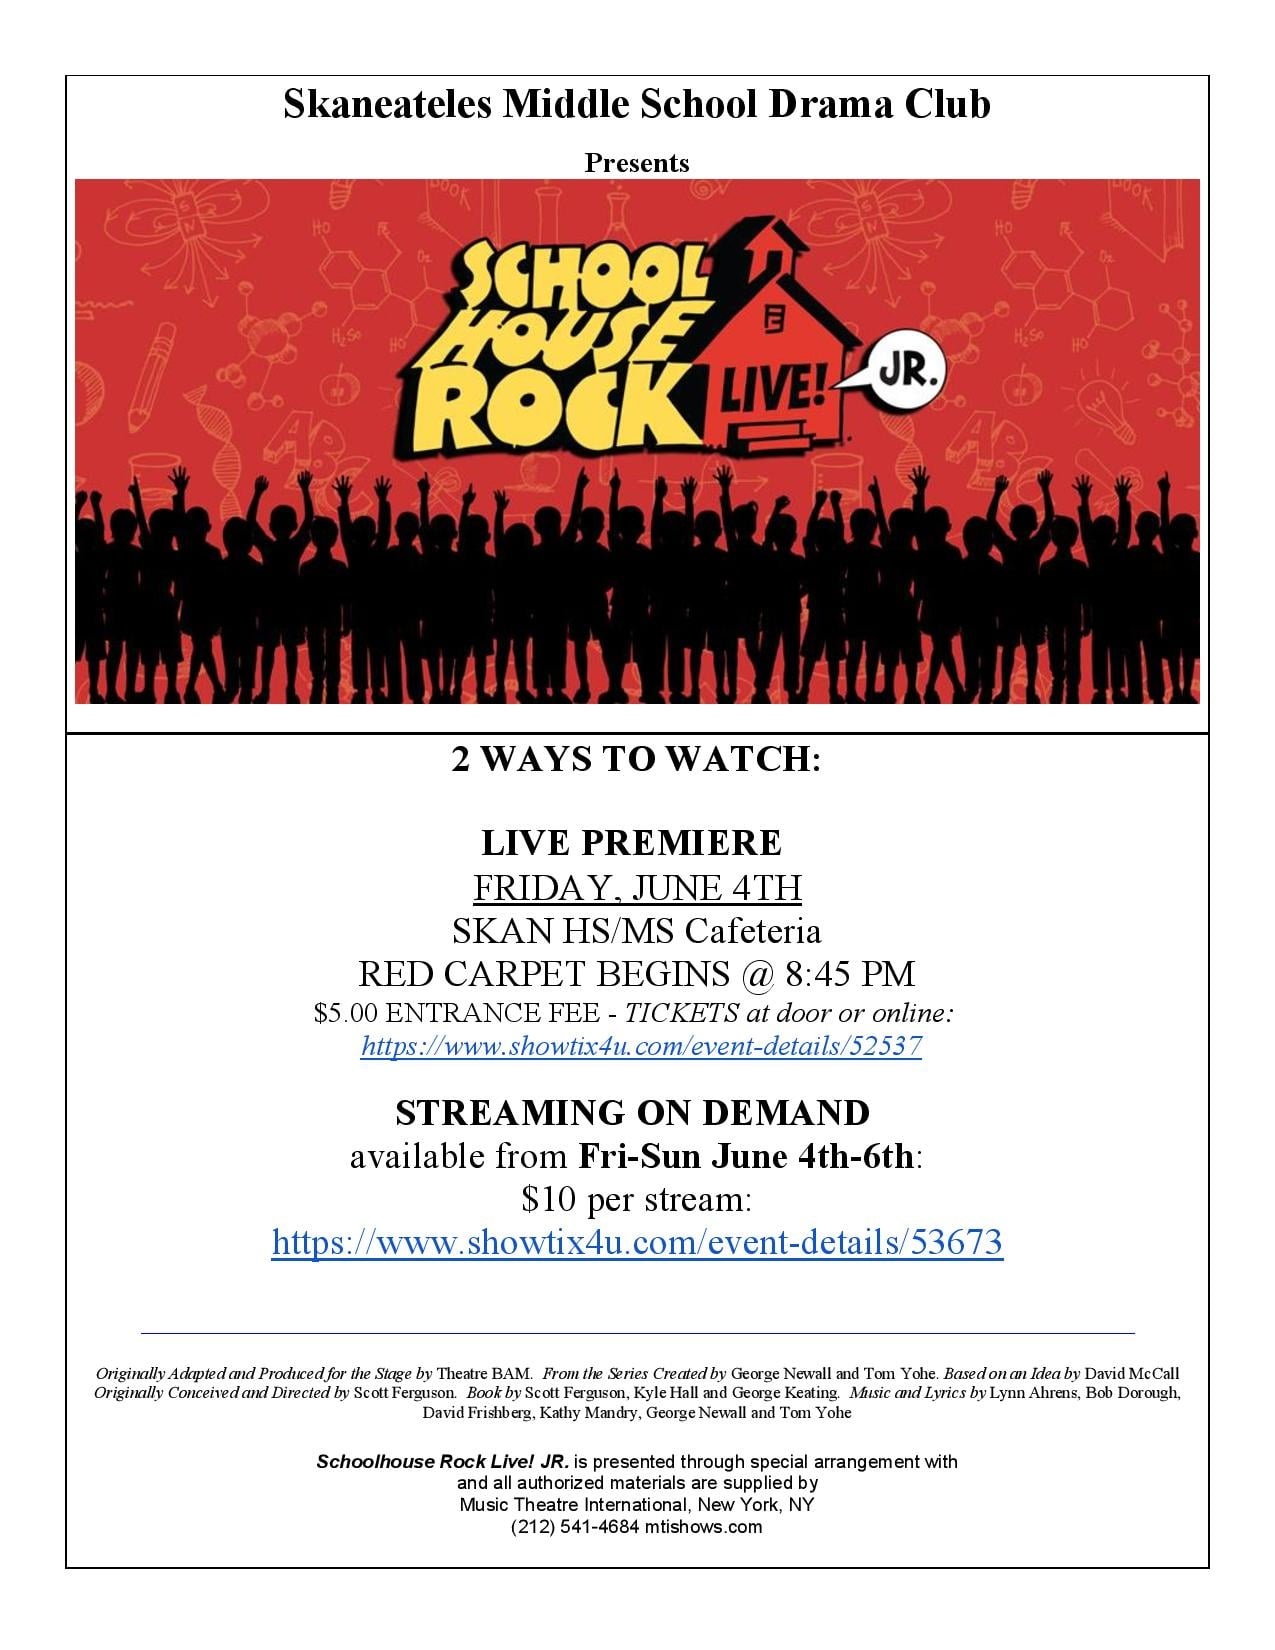 Skaneateles Middle School Drama Club Presents Schoolhouse Rock Live! Jr